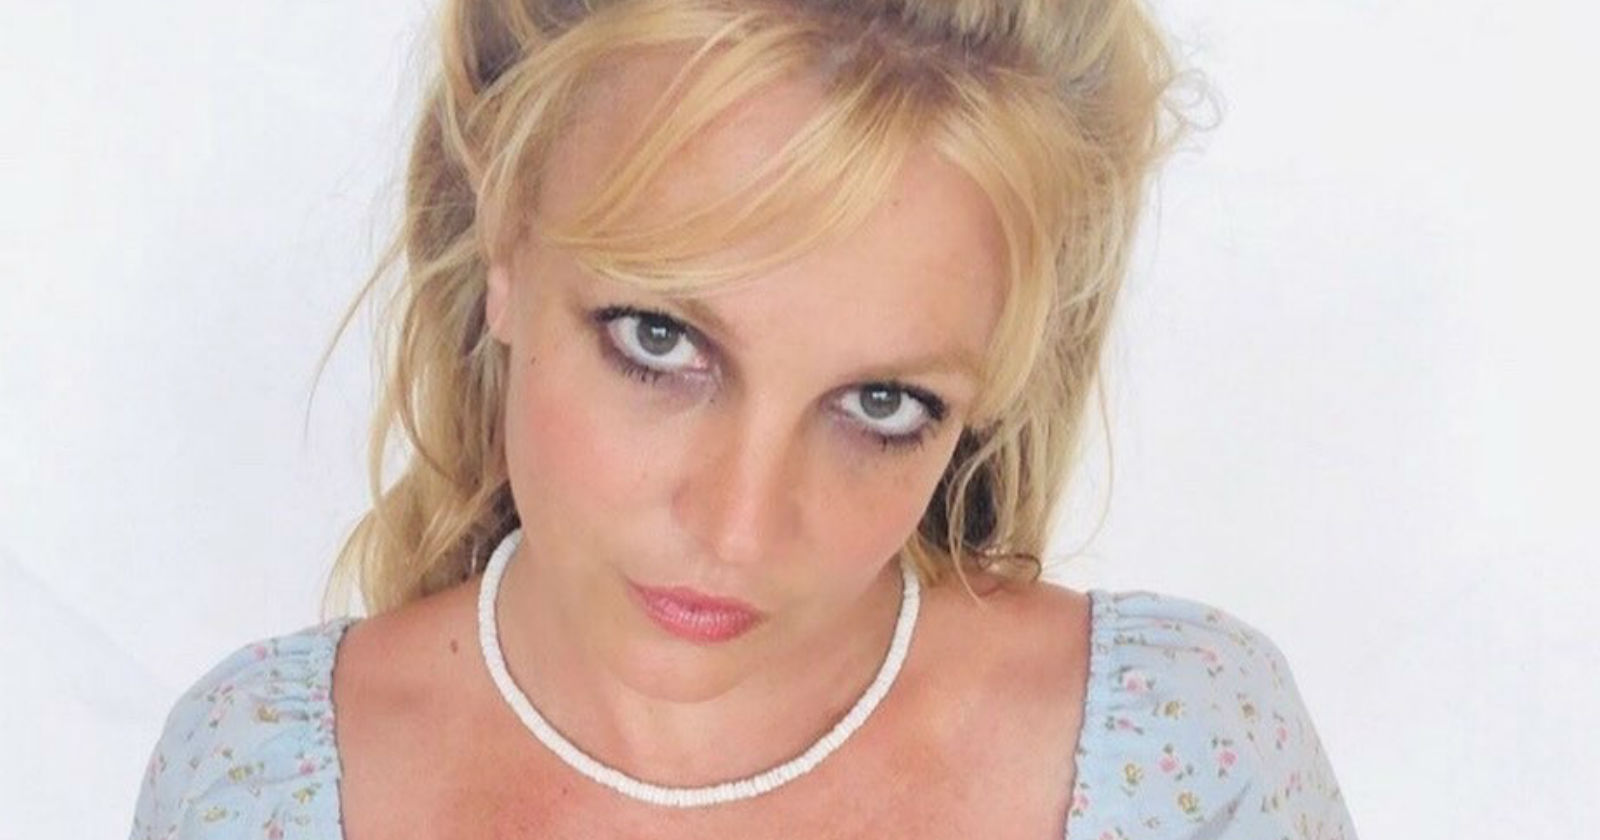 #FreeBritney Britney Spears